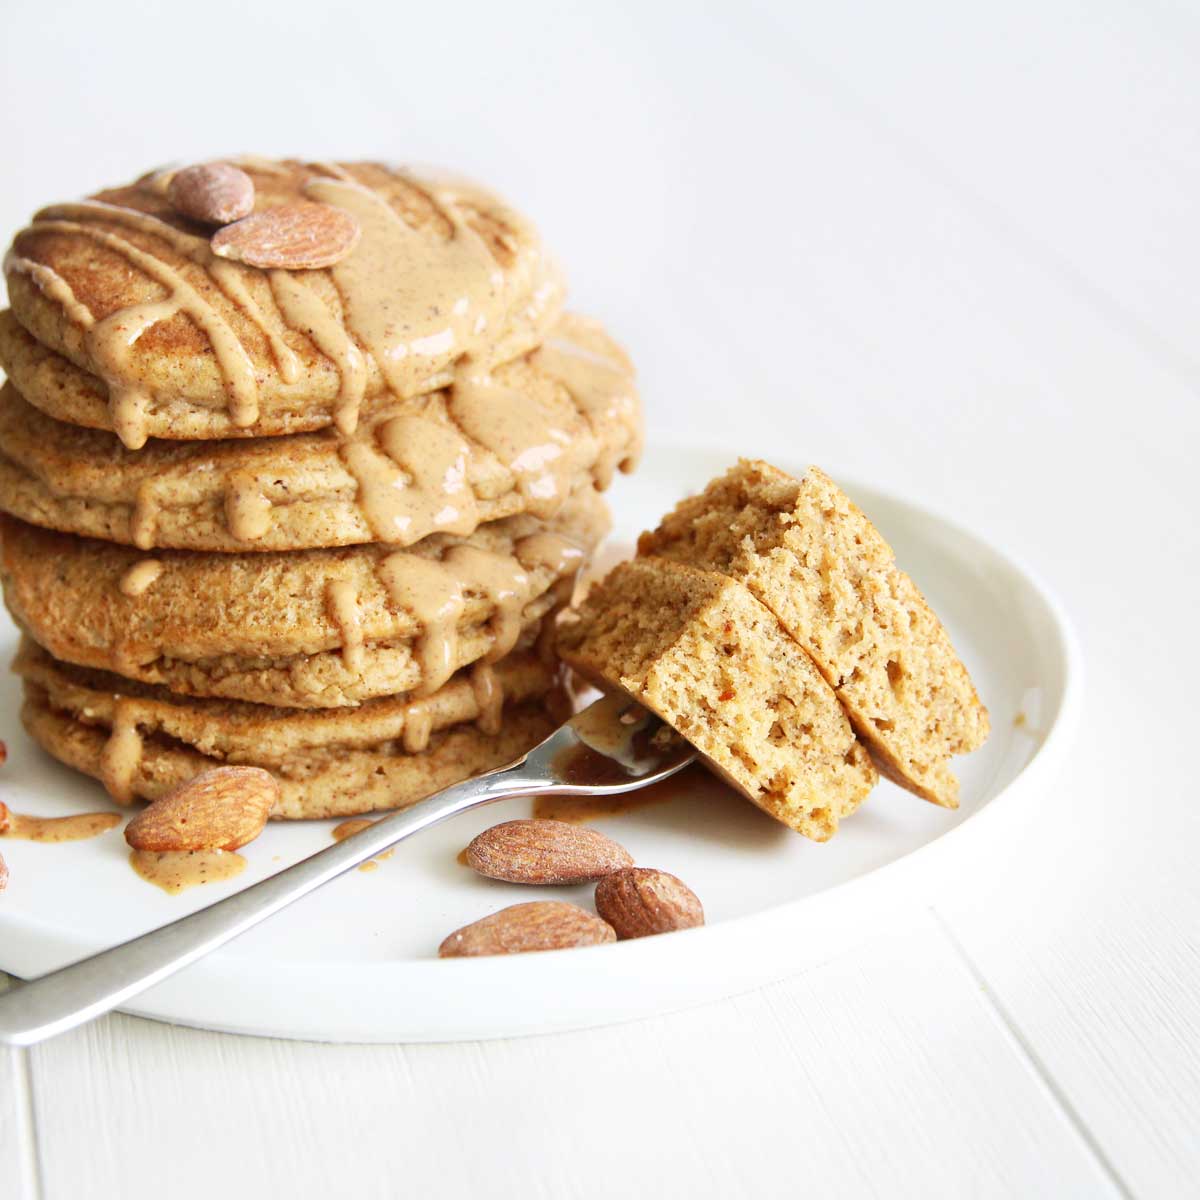 Fluffy Almond Butter Pancakes (Healthy, Gluten-Free Recipe) - mugwort songpyeon